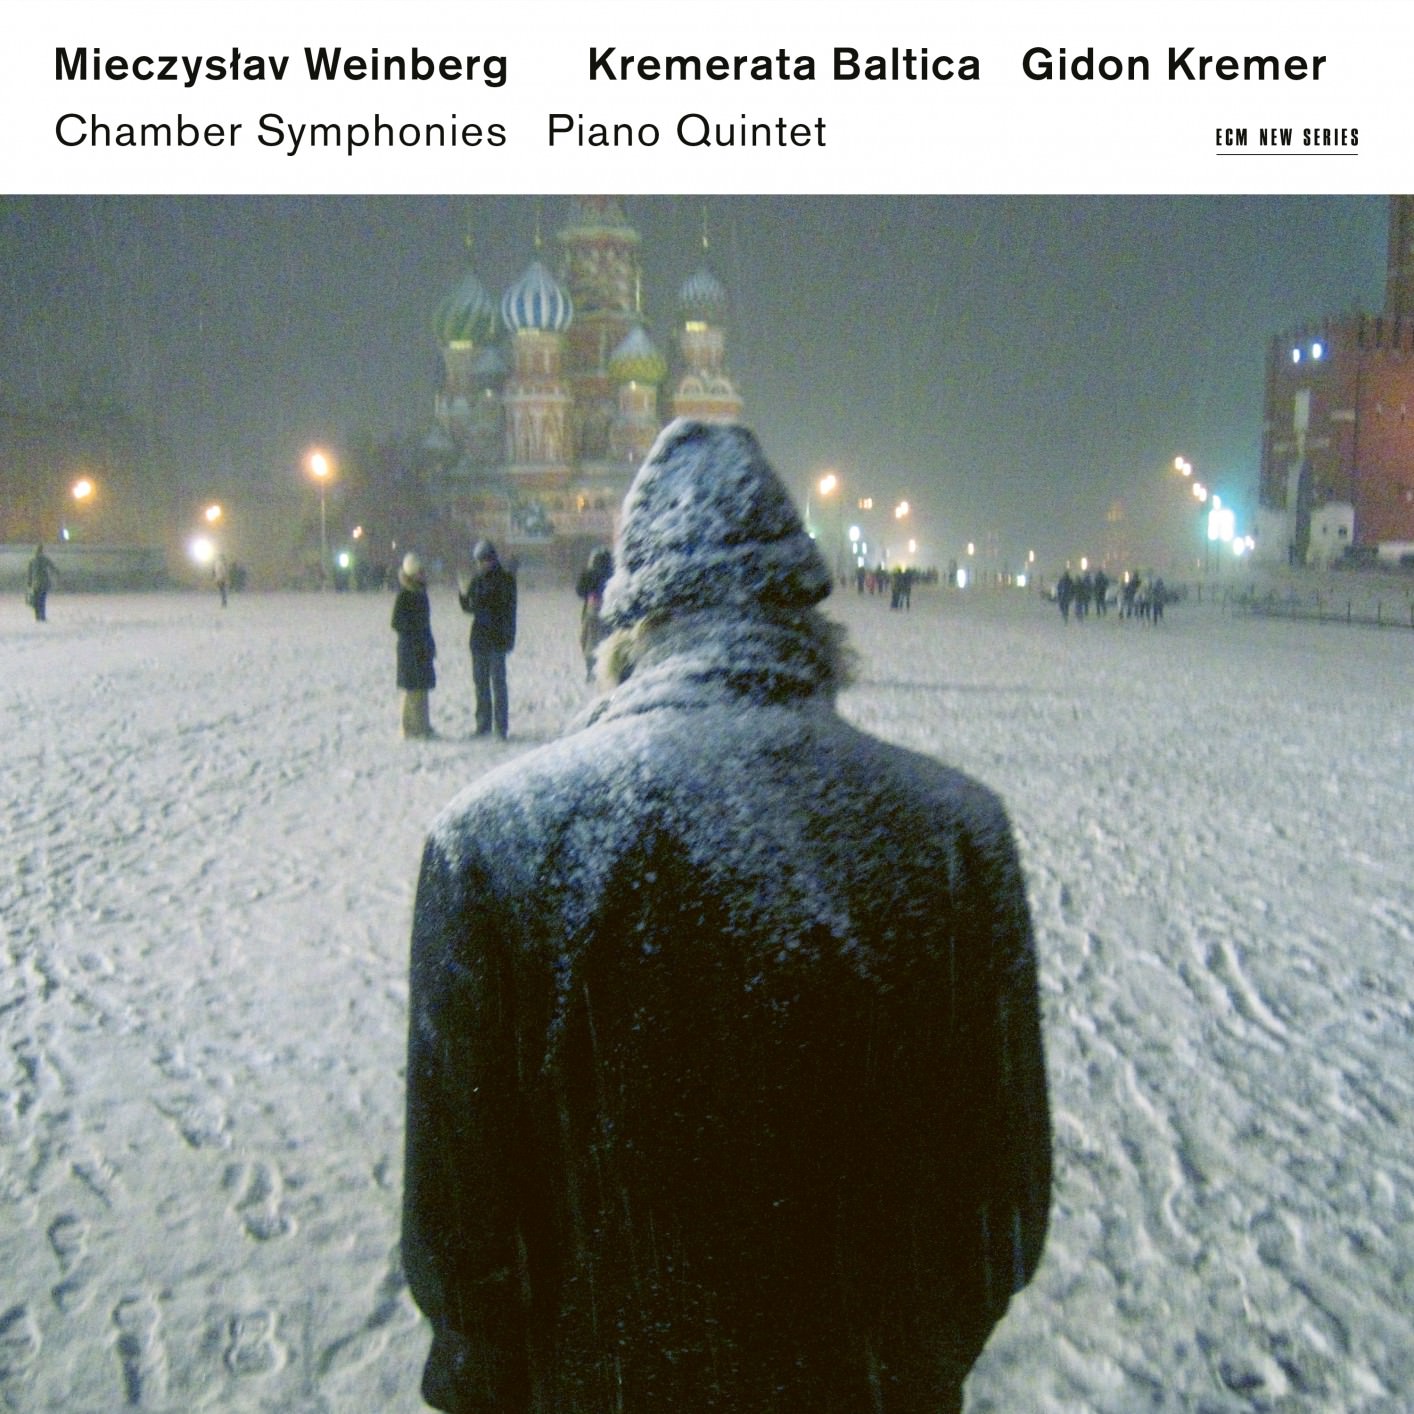 Kremerata Baltica & Gidon Kremer - Mieczysław Weinberg: Chamber Symphonies, Piano Quintet (2017) [FLAC 24bit/96kHz]